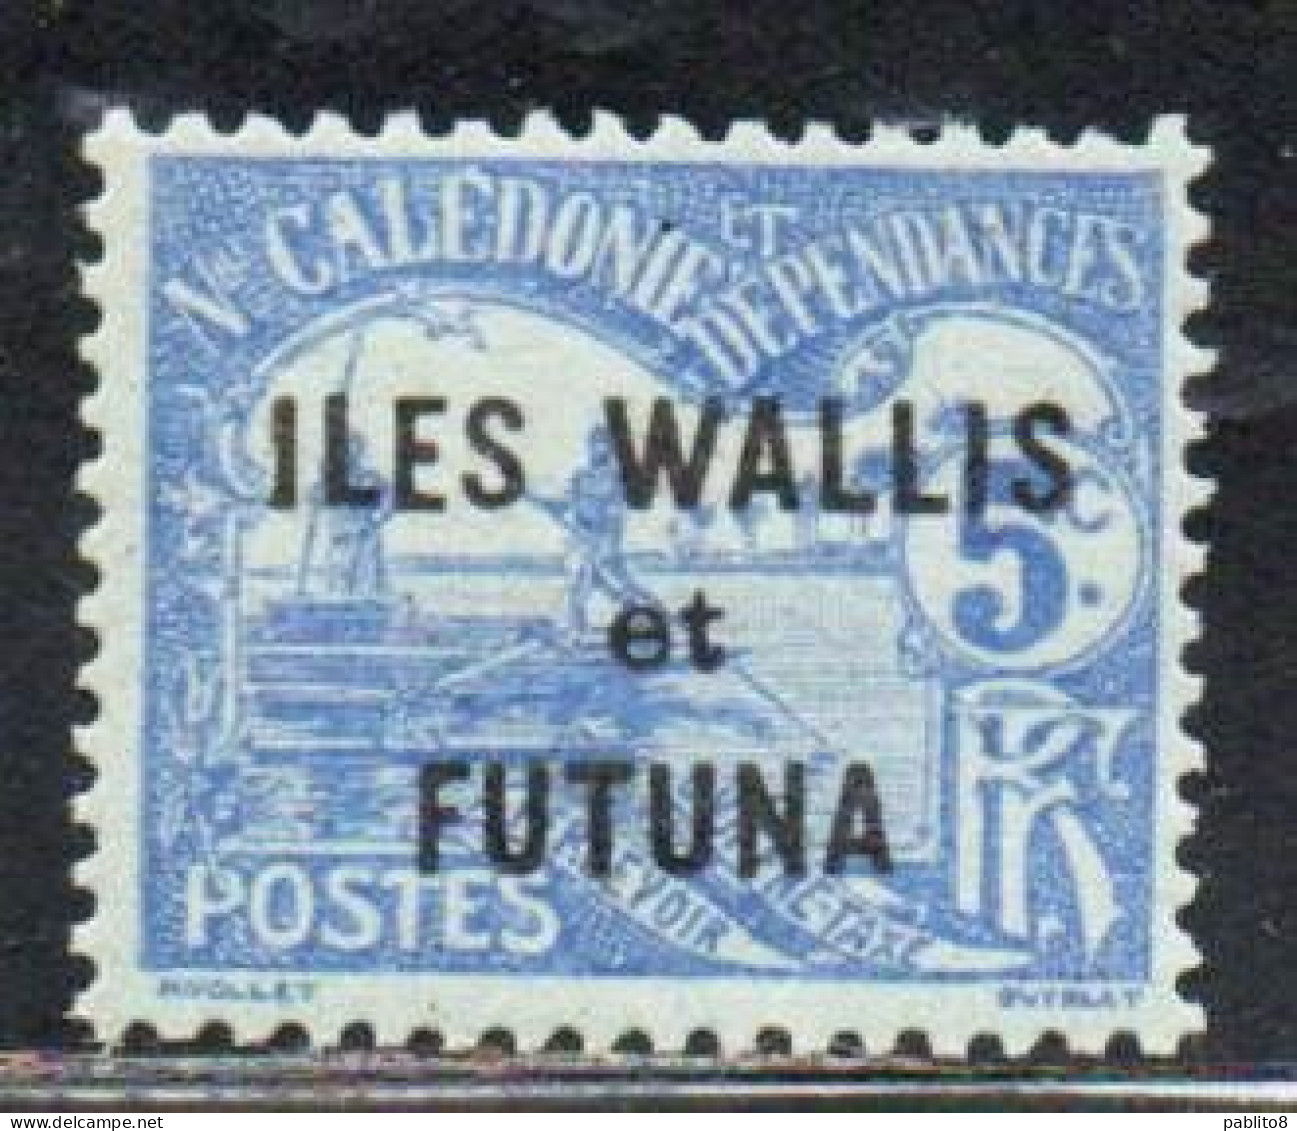 WALLIS AND FUTUNA ISLANDS 1920 POSTAGE DUE STAMPS TAXE SEGNATASSE MEN POLING BOAT NEW CALEDONIA OVERPRINTED 5c MH - Segnatasse